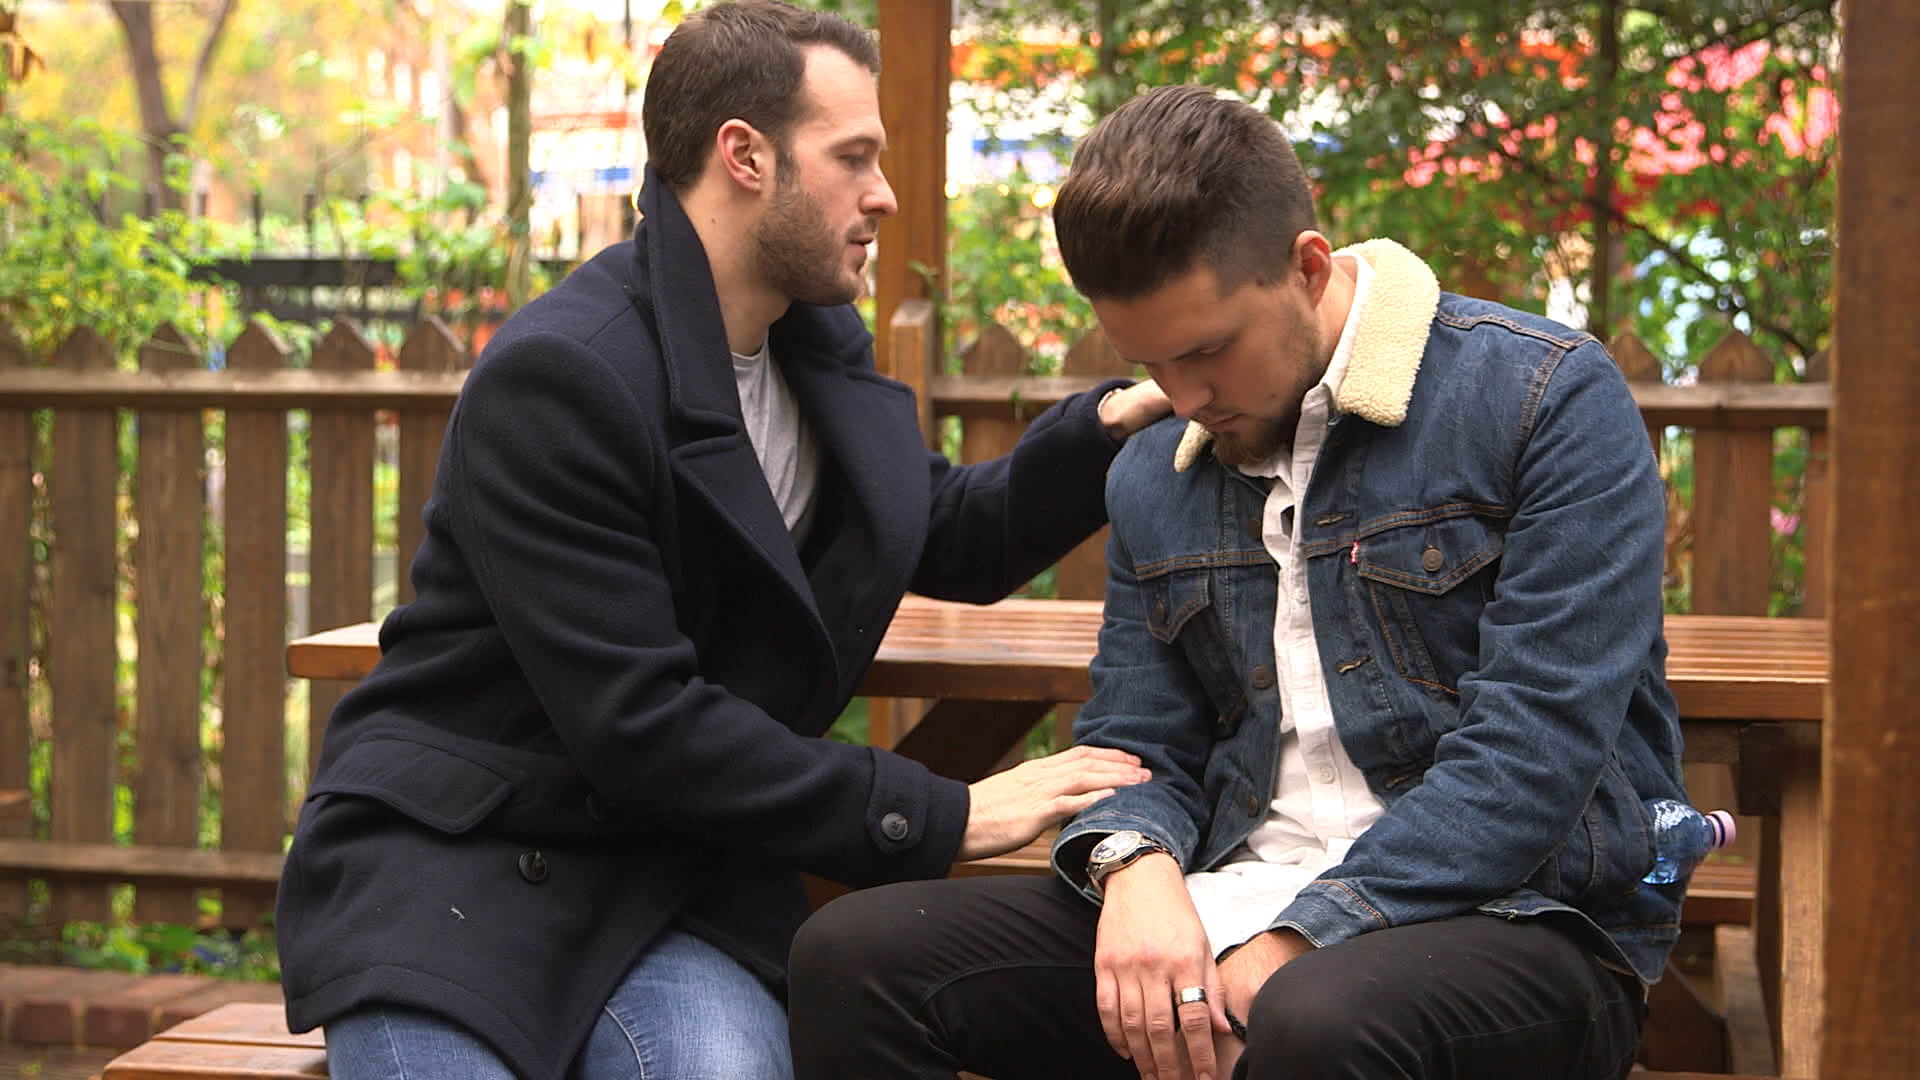 Aaron calvert hypnotising George on a bench in hello stranger for channel 4